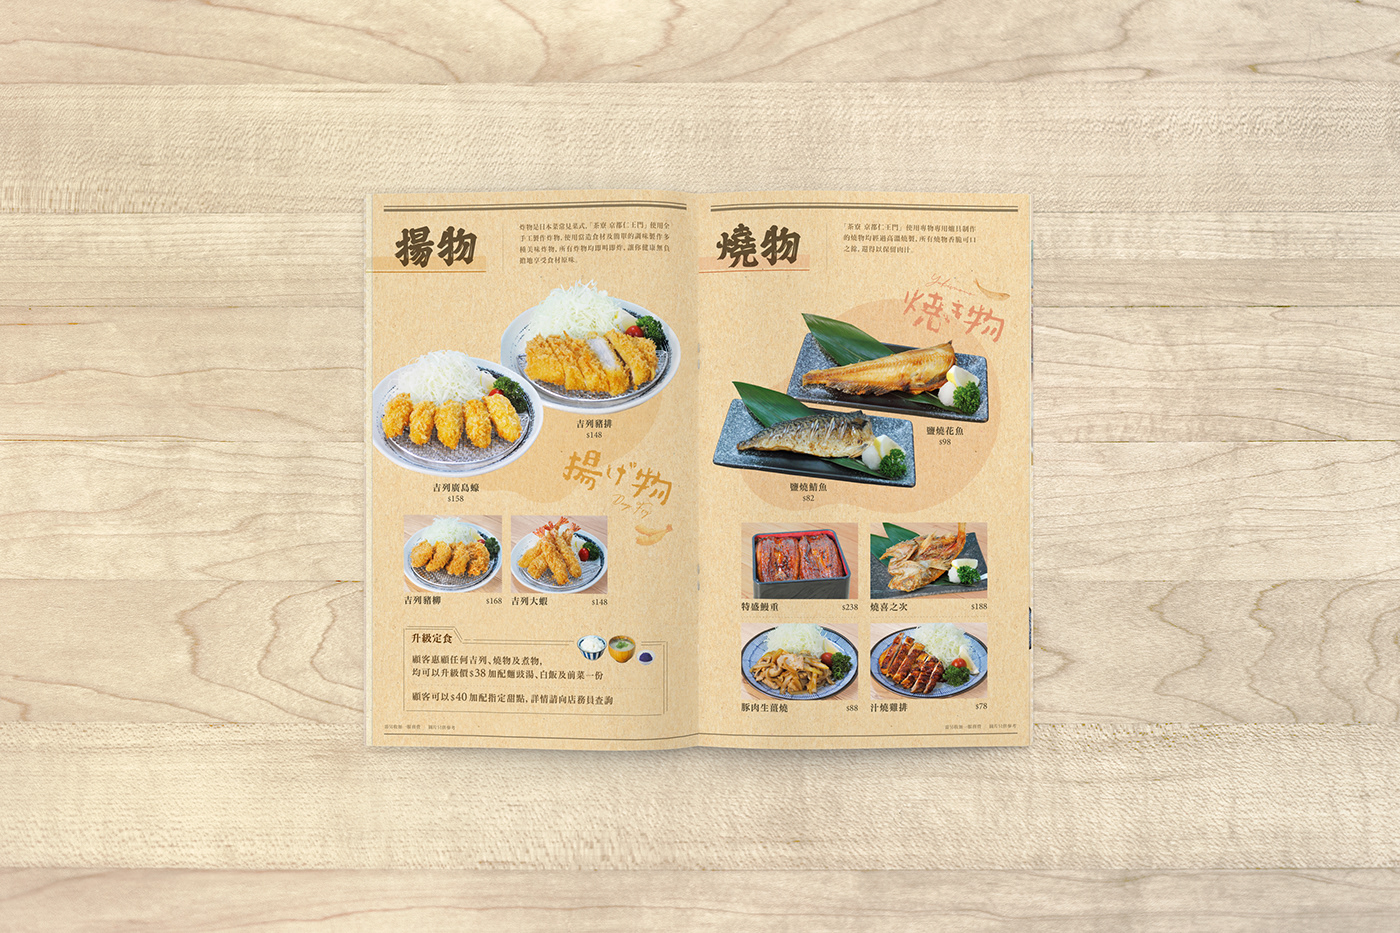 food photography japanese food japanese menu Japanese Restaurant menu design menu photography pancake restaurant 菜單 食物攝影